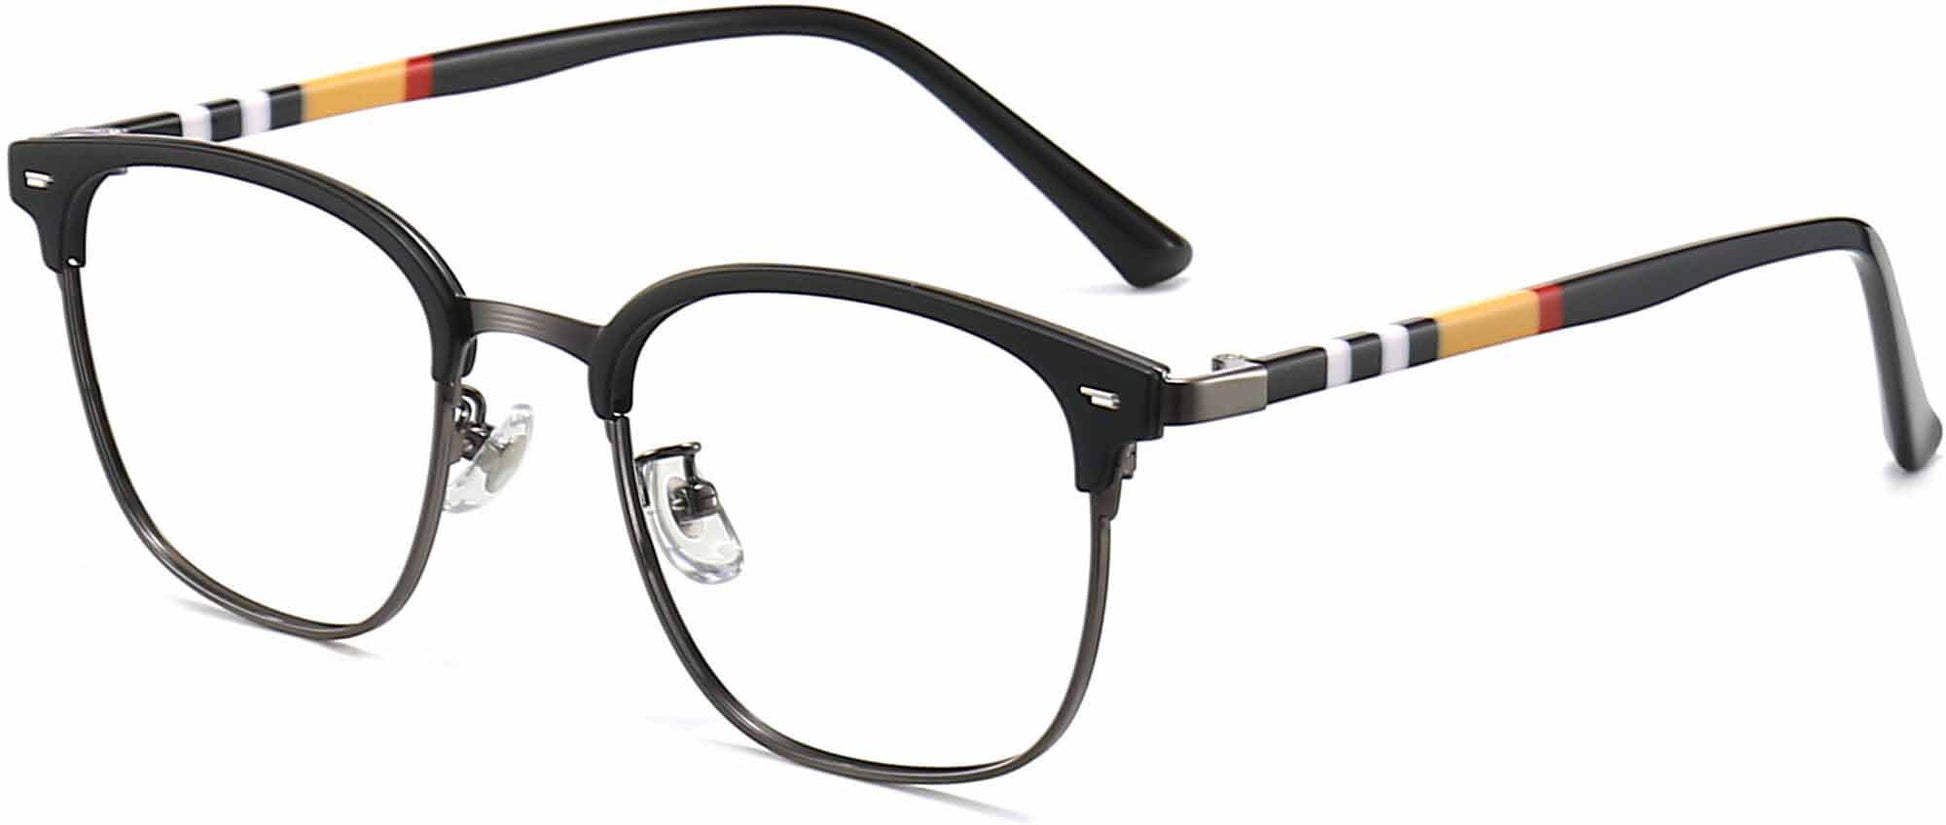 Mdonne Browline Black Eyeglasses from ANRRI, angle view